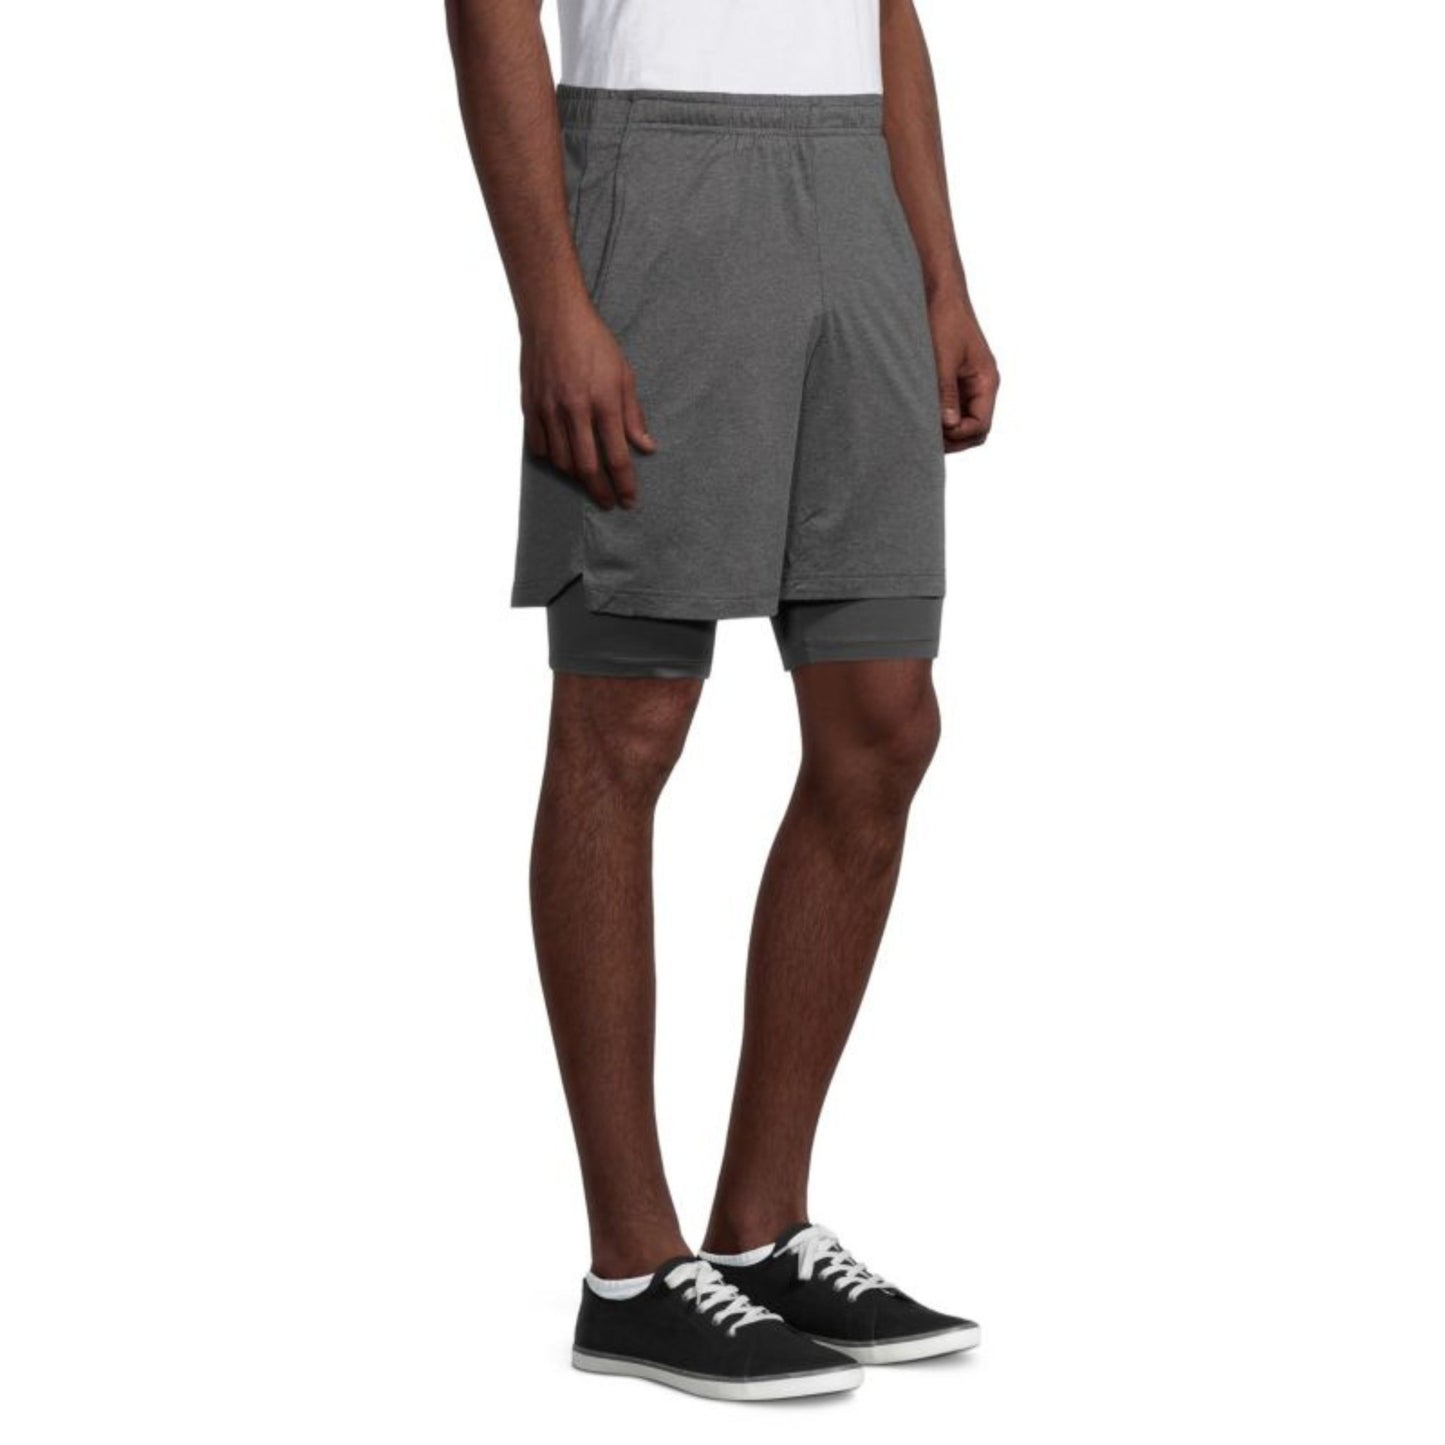 Spyder Men's Double-Layer Shorts - DK Gray